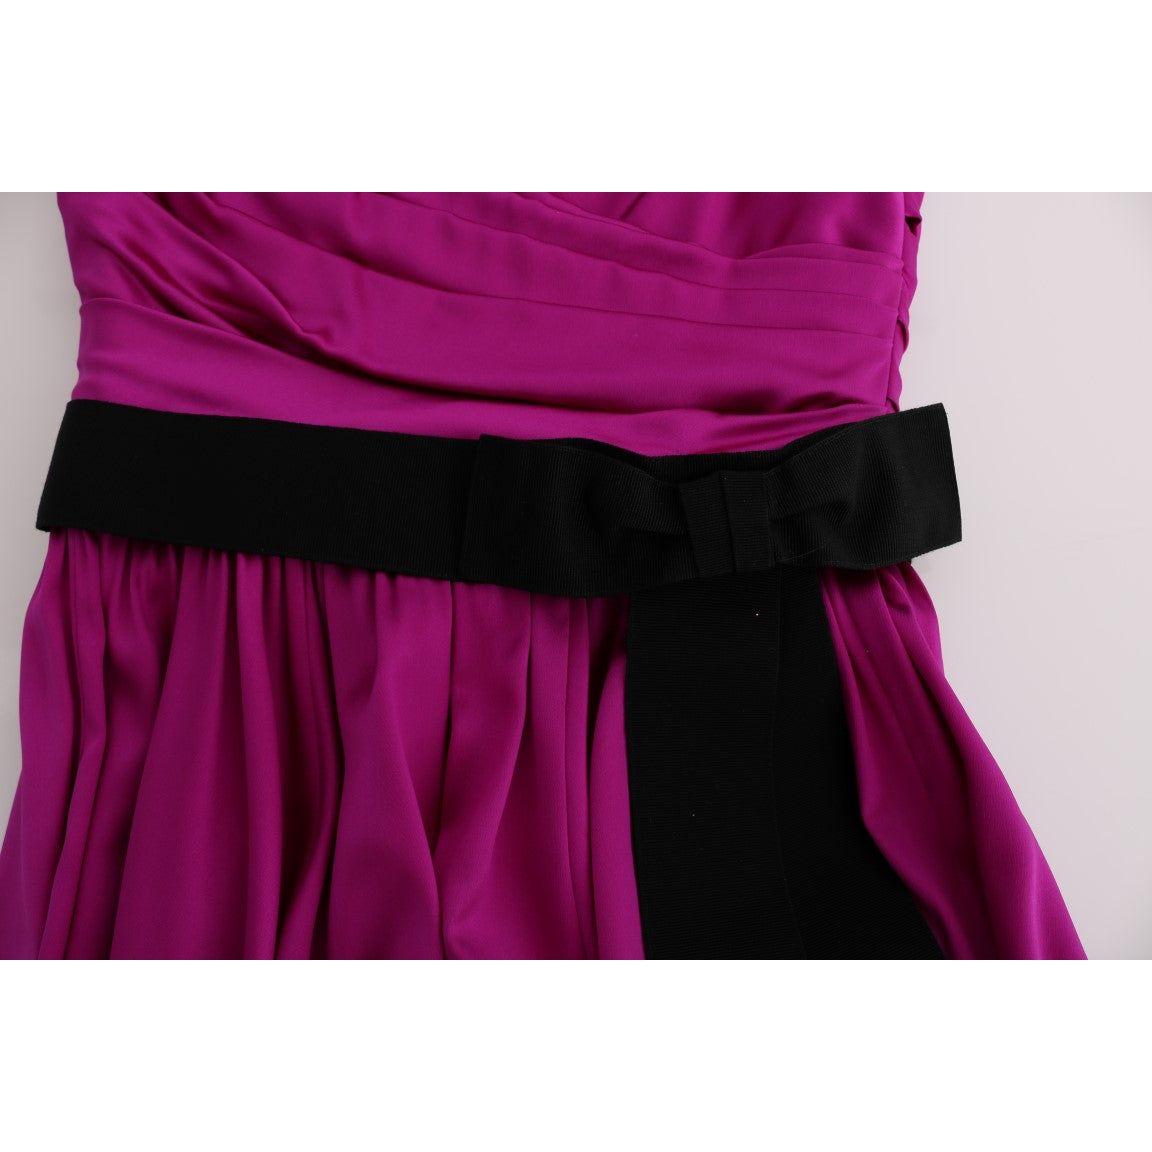 Dolce & Gabbana Elegant Pink Silk Gown Dress pink-silk-stretch-shift-long-dress 450535-pink-silk-stretch-shift-long-dress-8.jpg